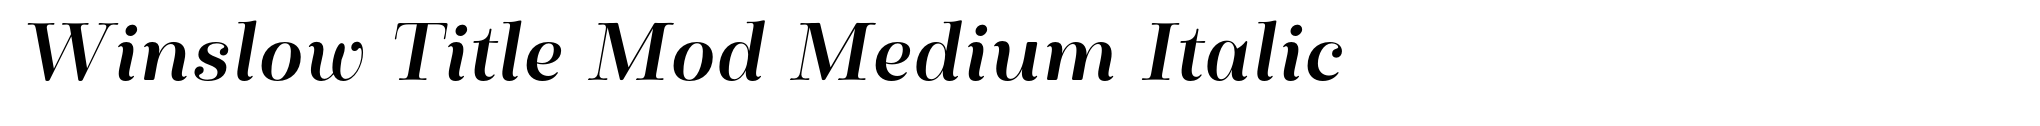 Winslow Title Mod Medium Italic image